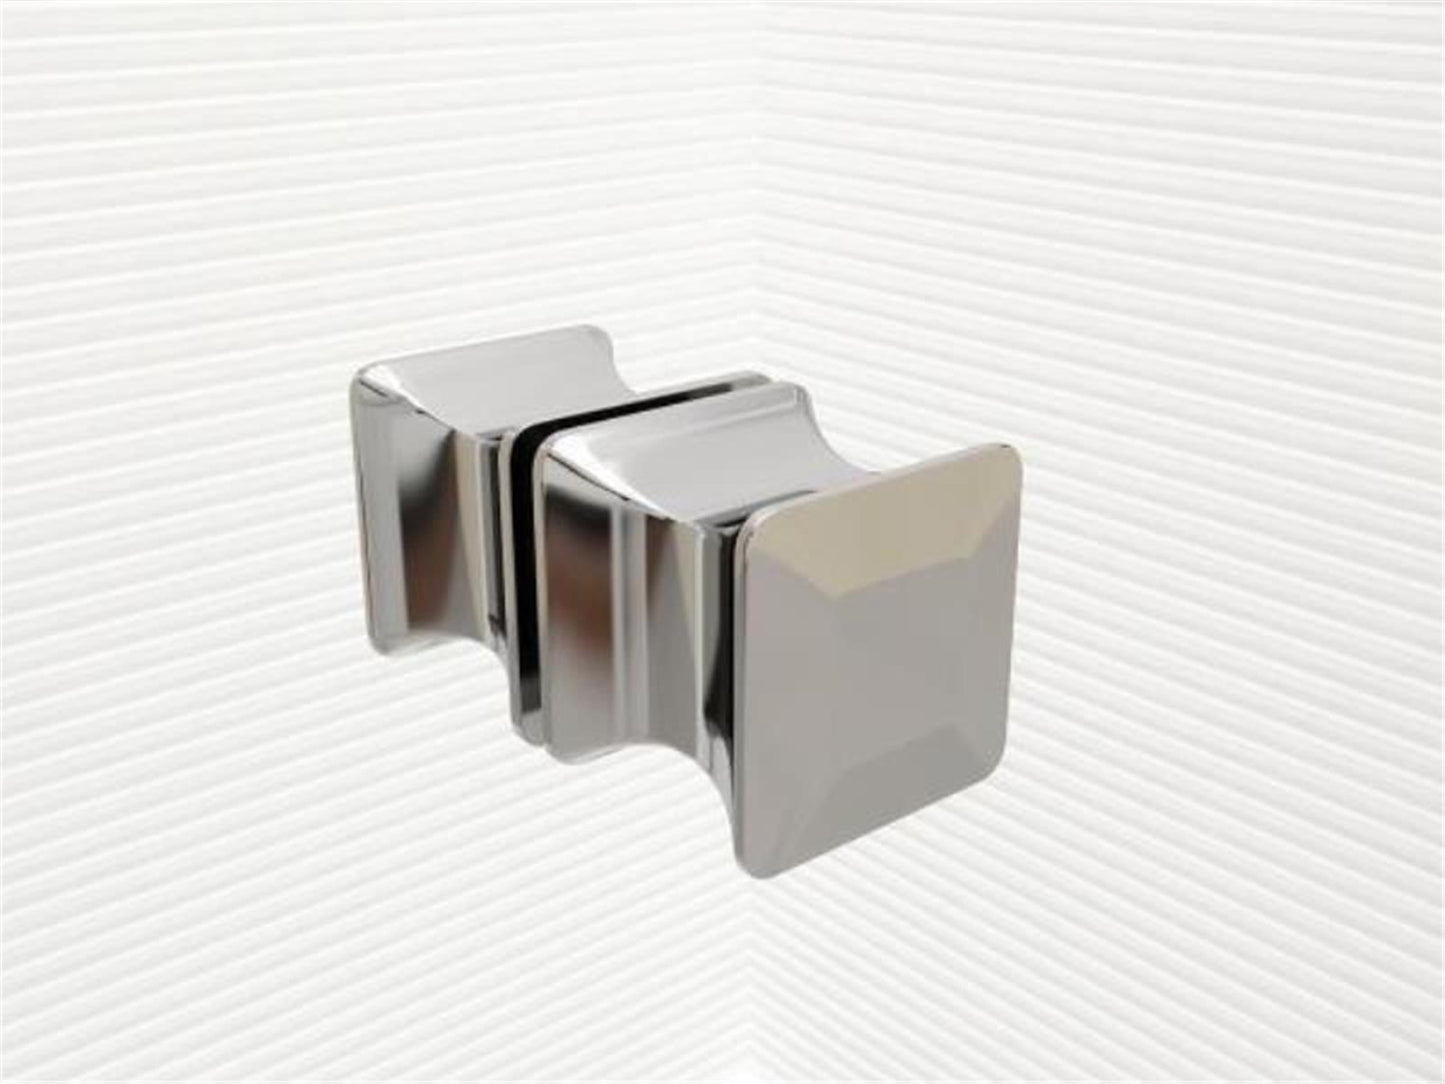 GlasHomeCenter - Cabina de ducha en forma de U "Asuka" (120x100x195cm) - 8mm - cabina de ducha de esquina - mampara de ducha - sin plato de ducha